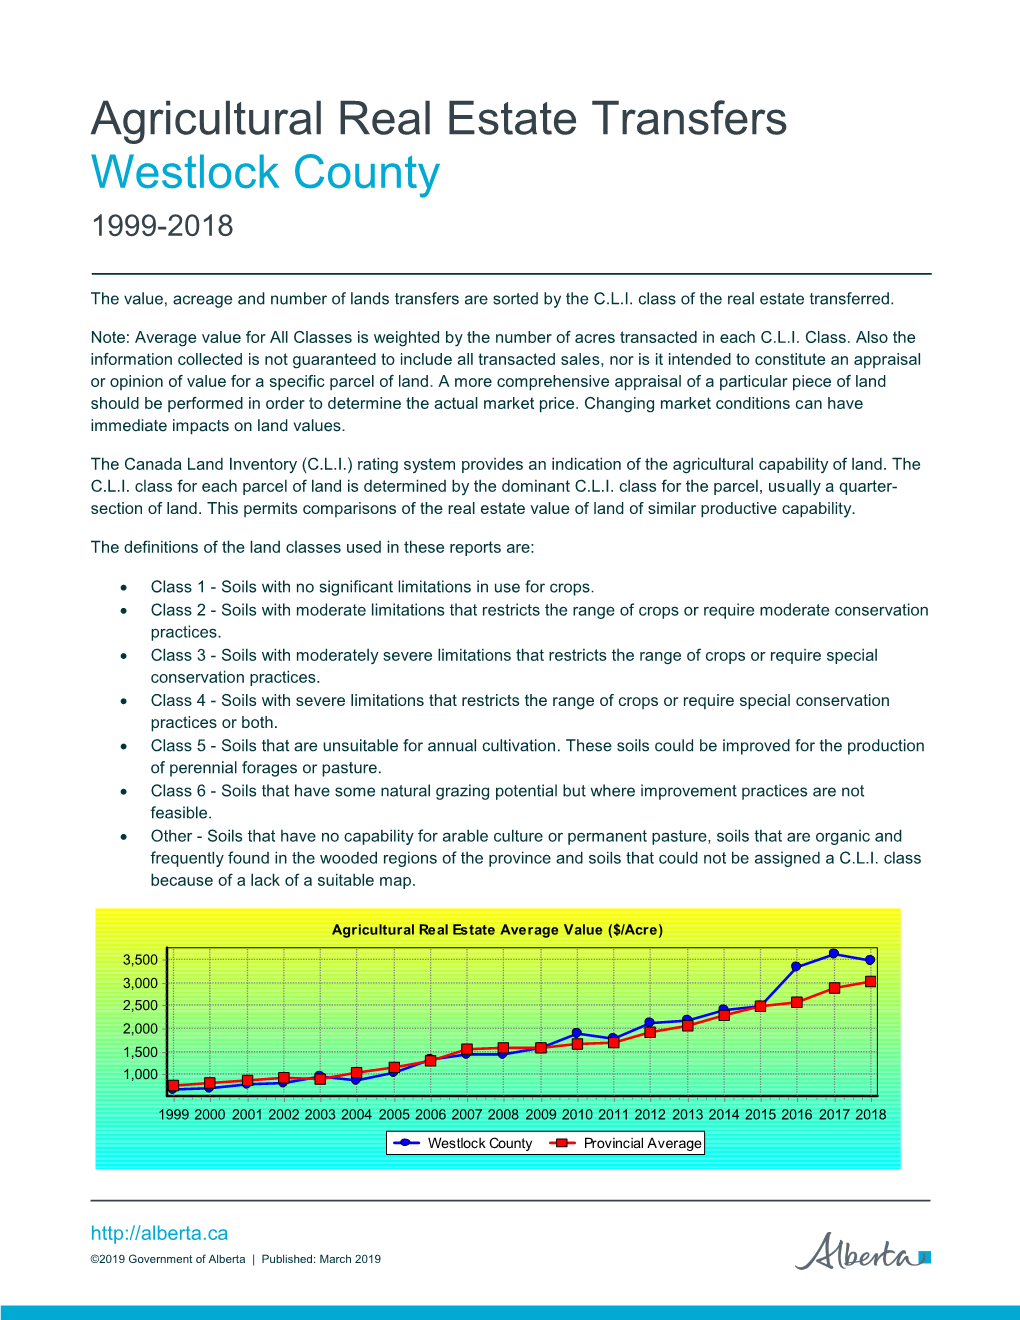 Westlock County 1999-2018